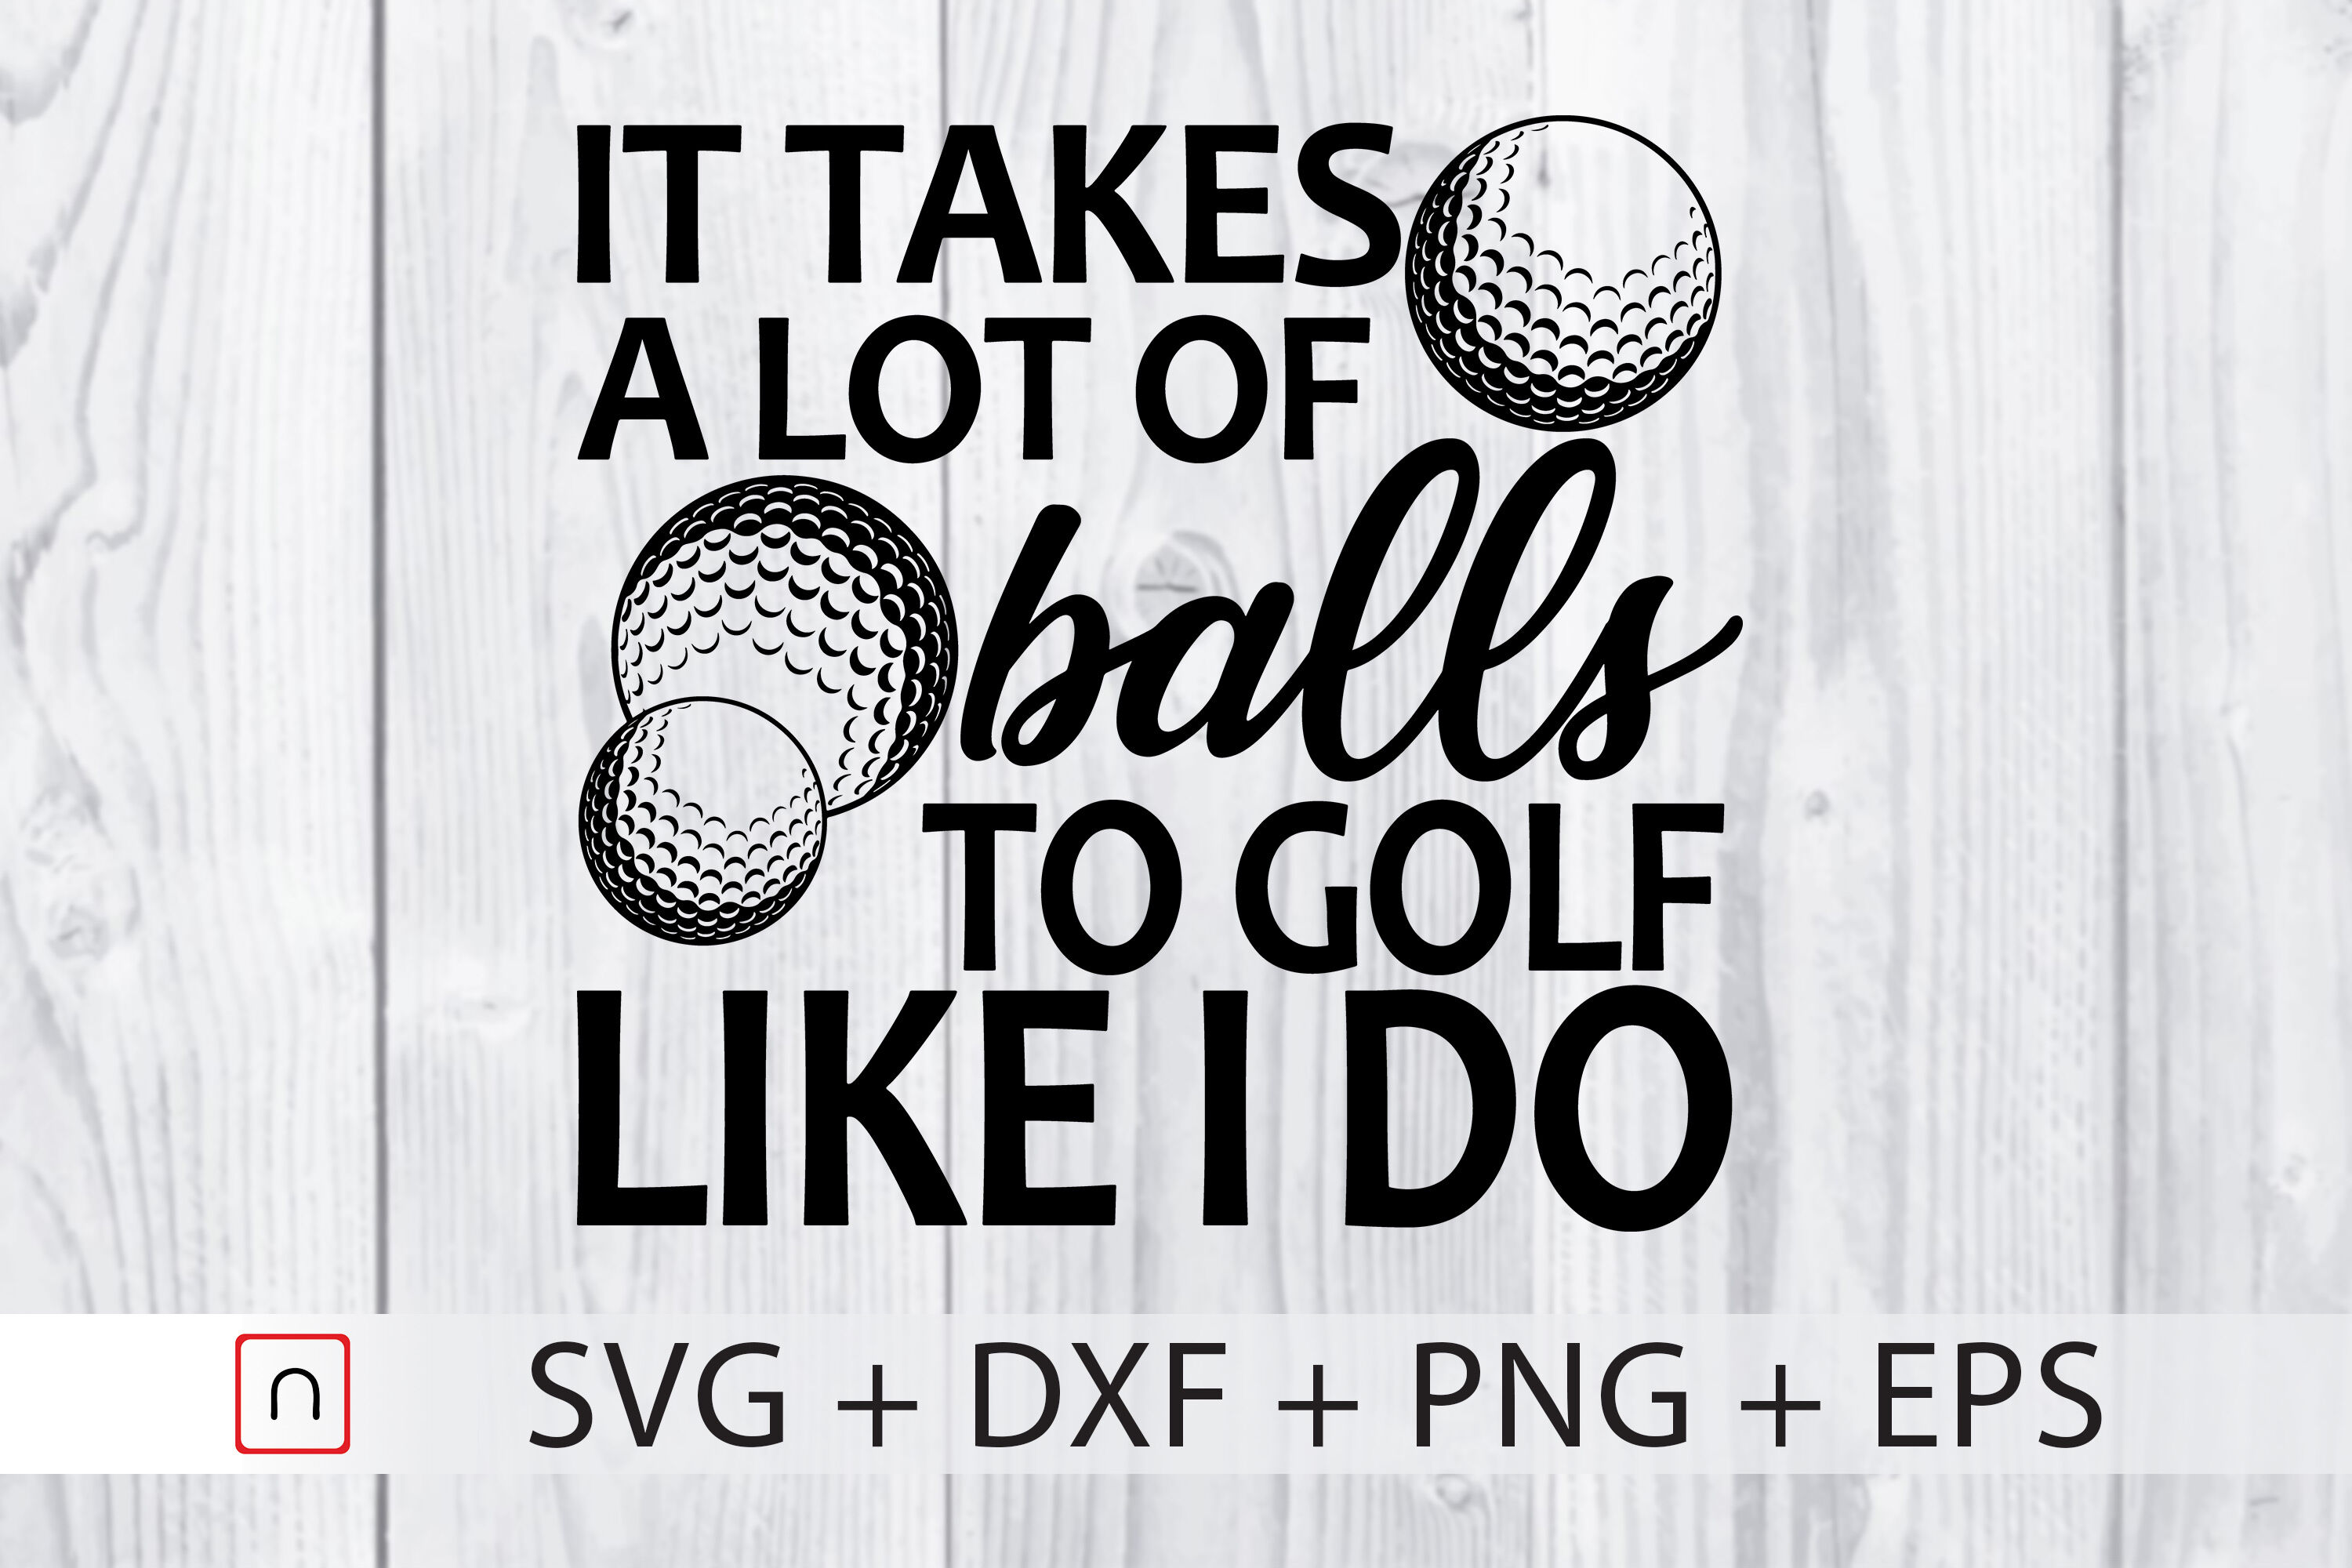 Golf Svg Cut File Takes A Lot Of Balls By Novalia Thehungryjpeg Com